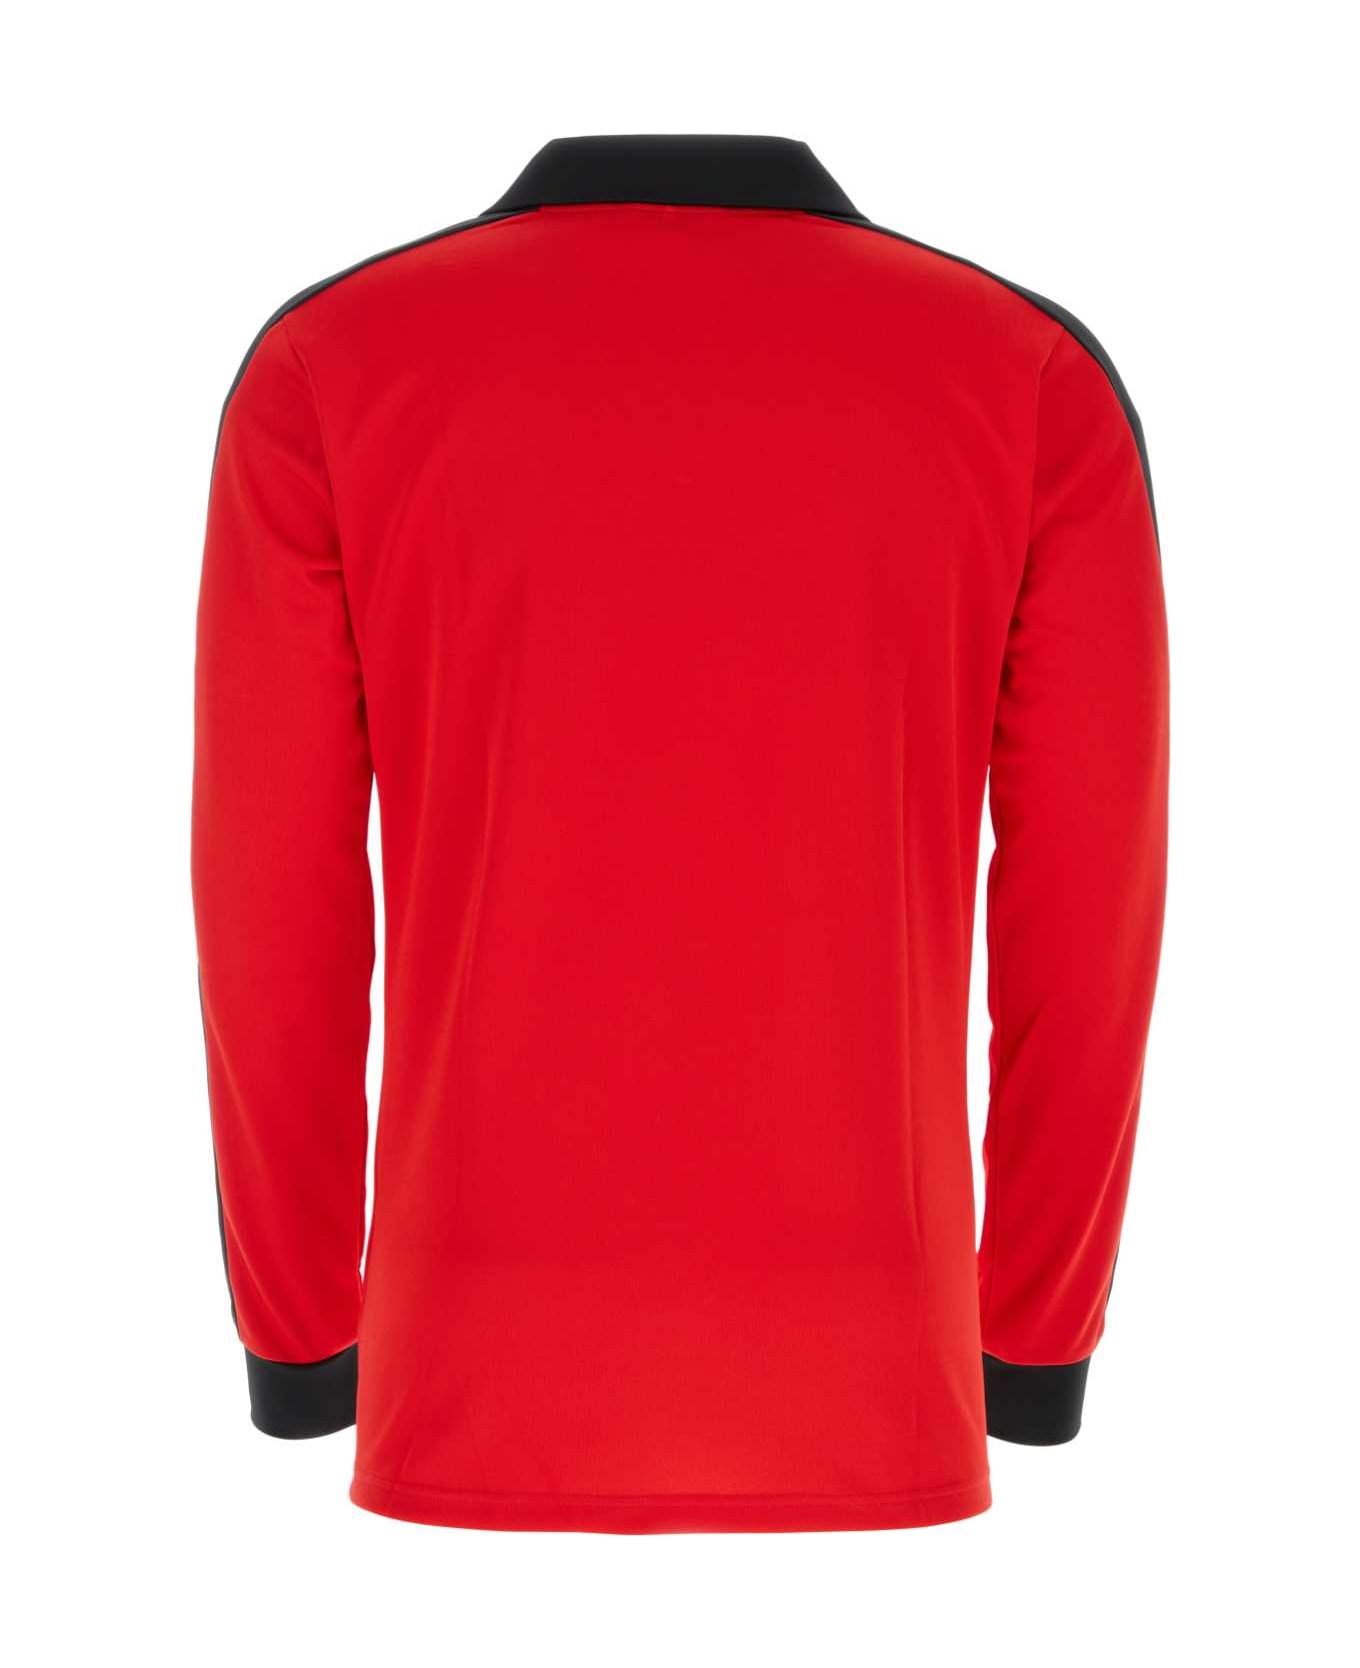 Wales Bonner Red Polyester Oversize T-shirt - REDANDBLACK